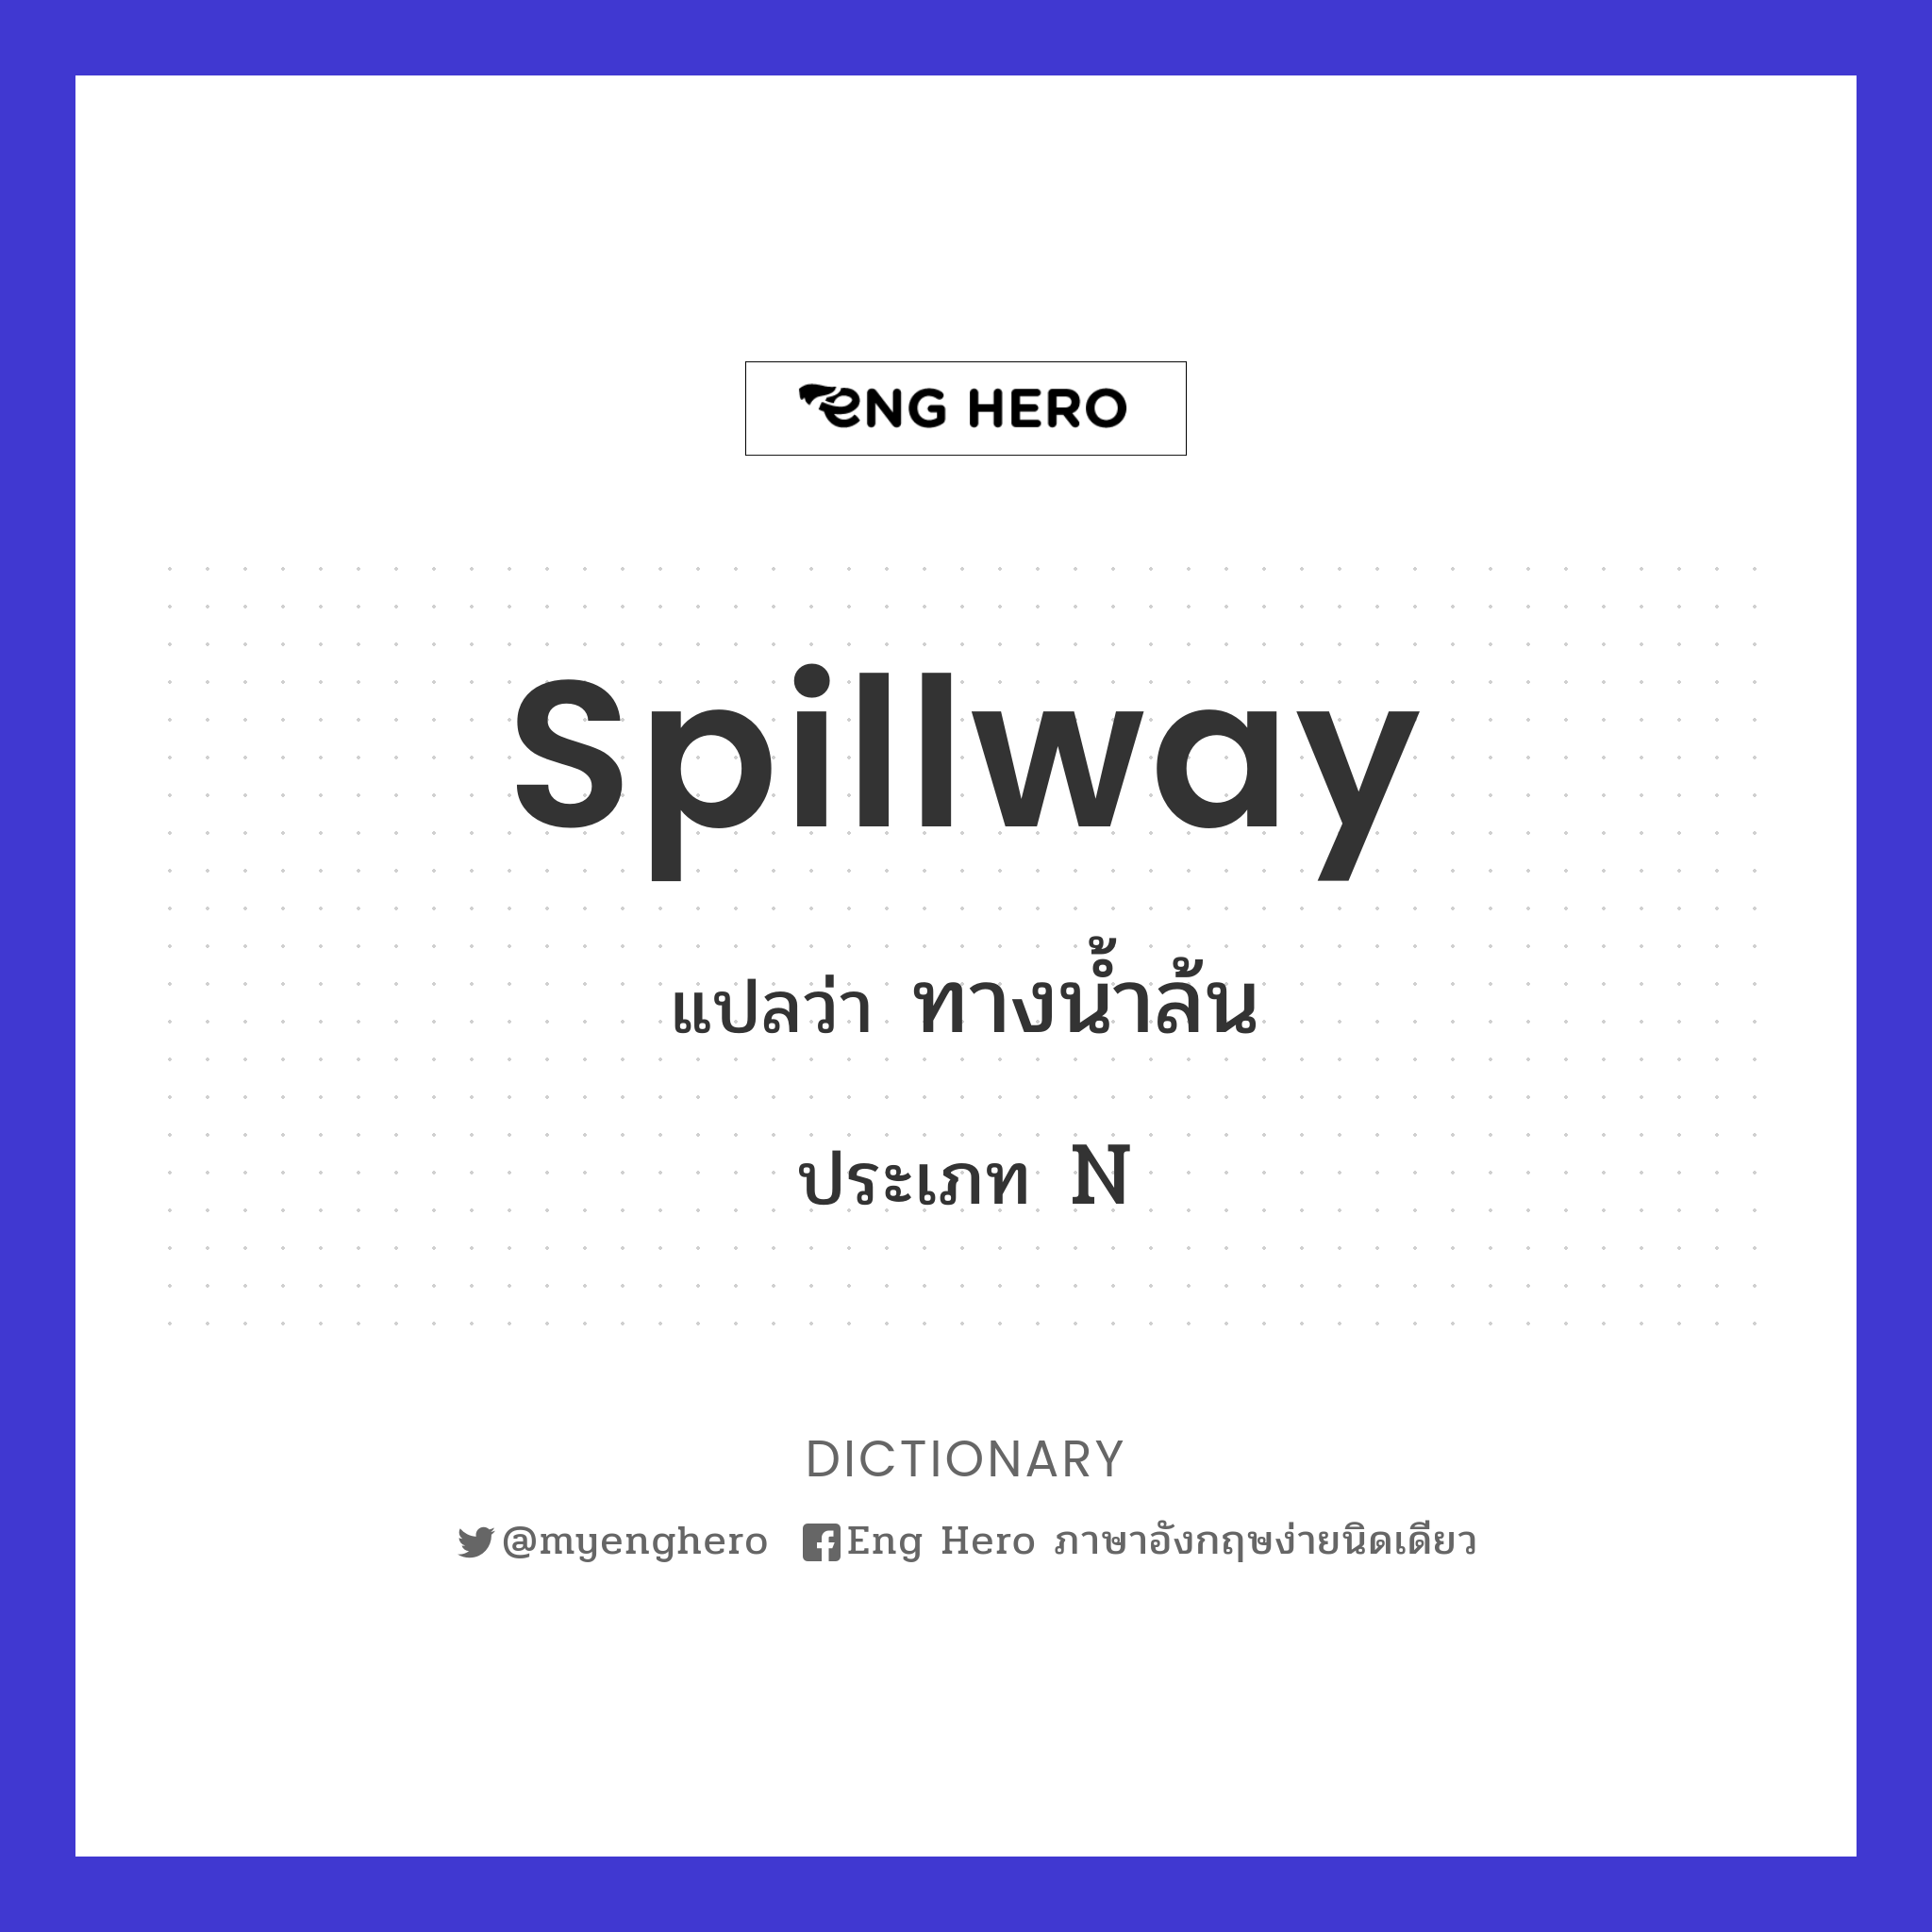 spillway